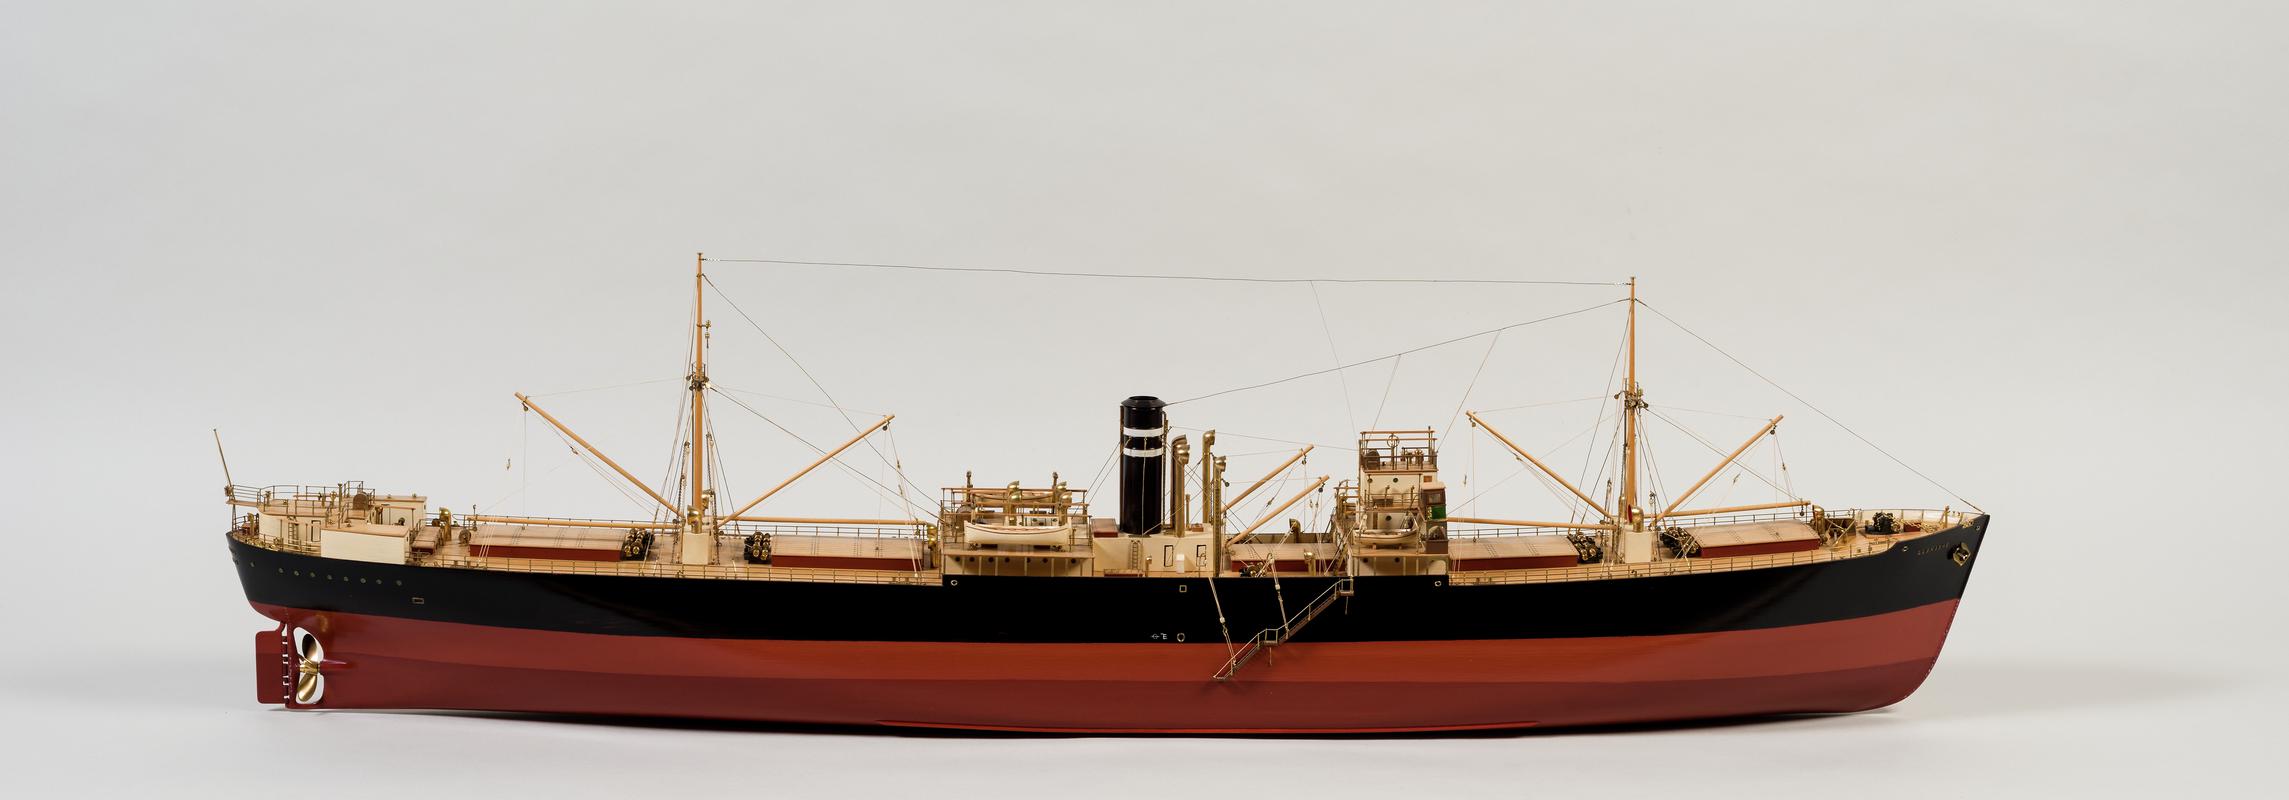 S.S. LLANASHE, full hull ship model